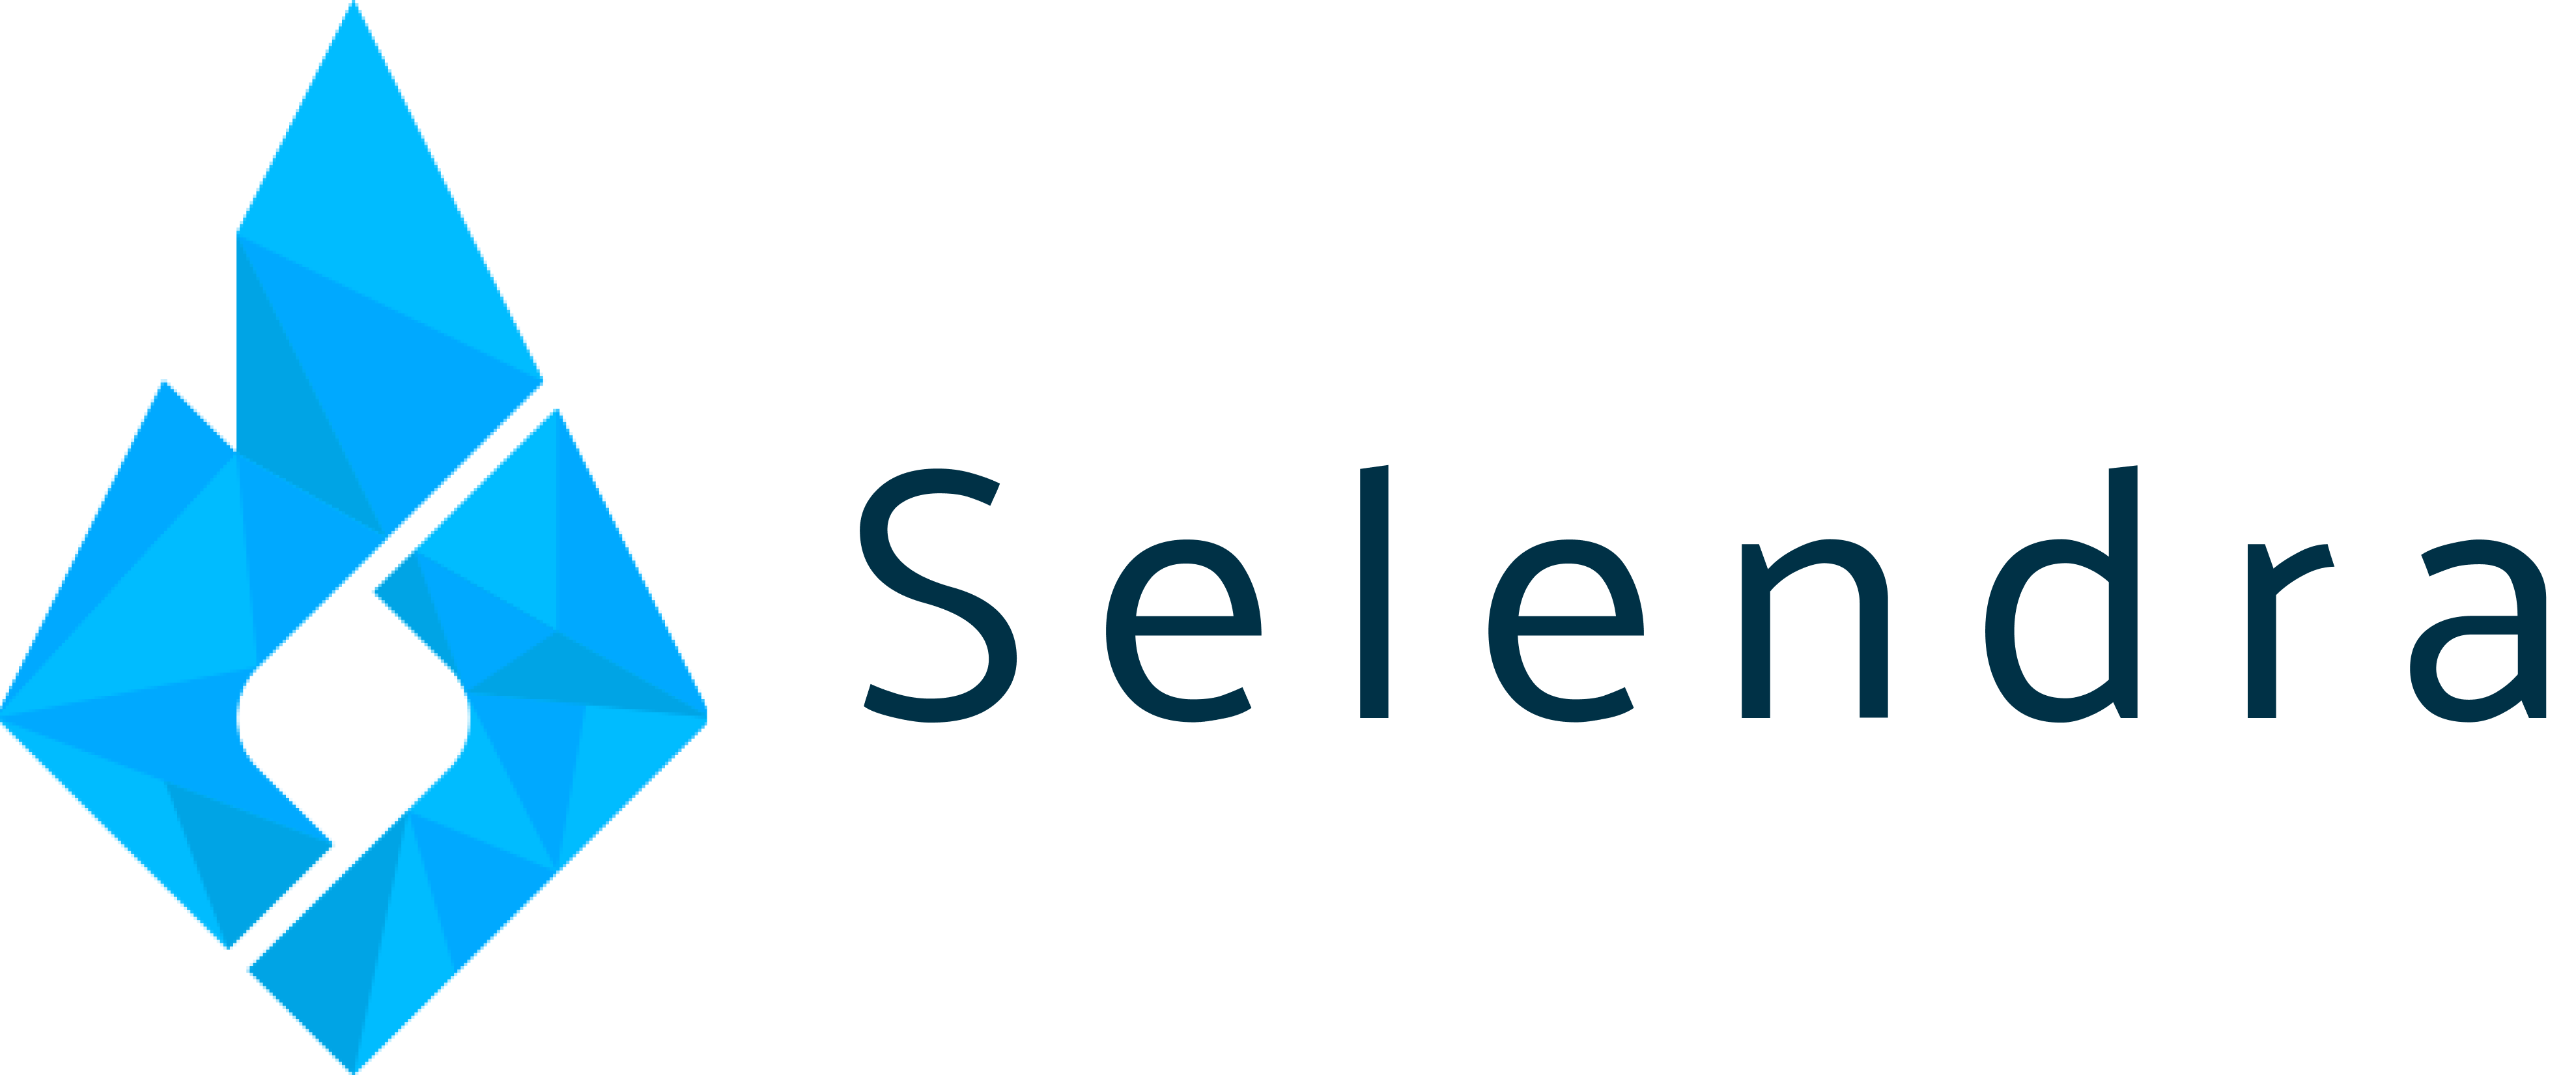 selendra logo